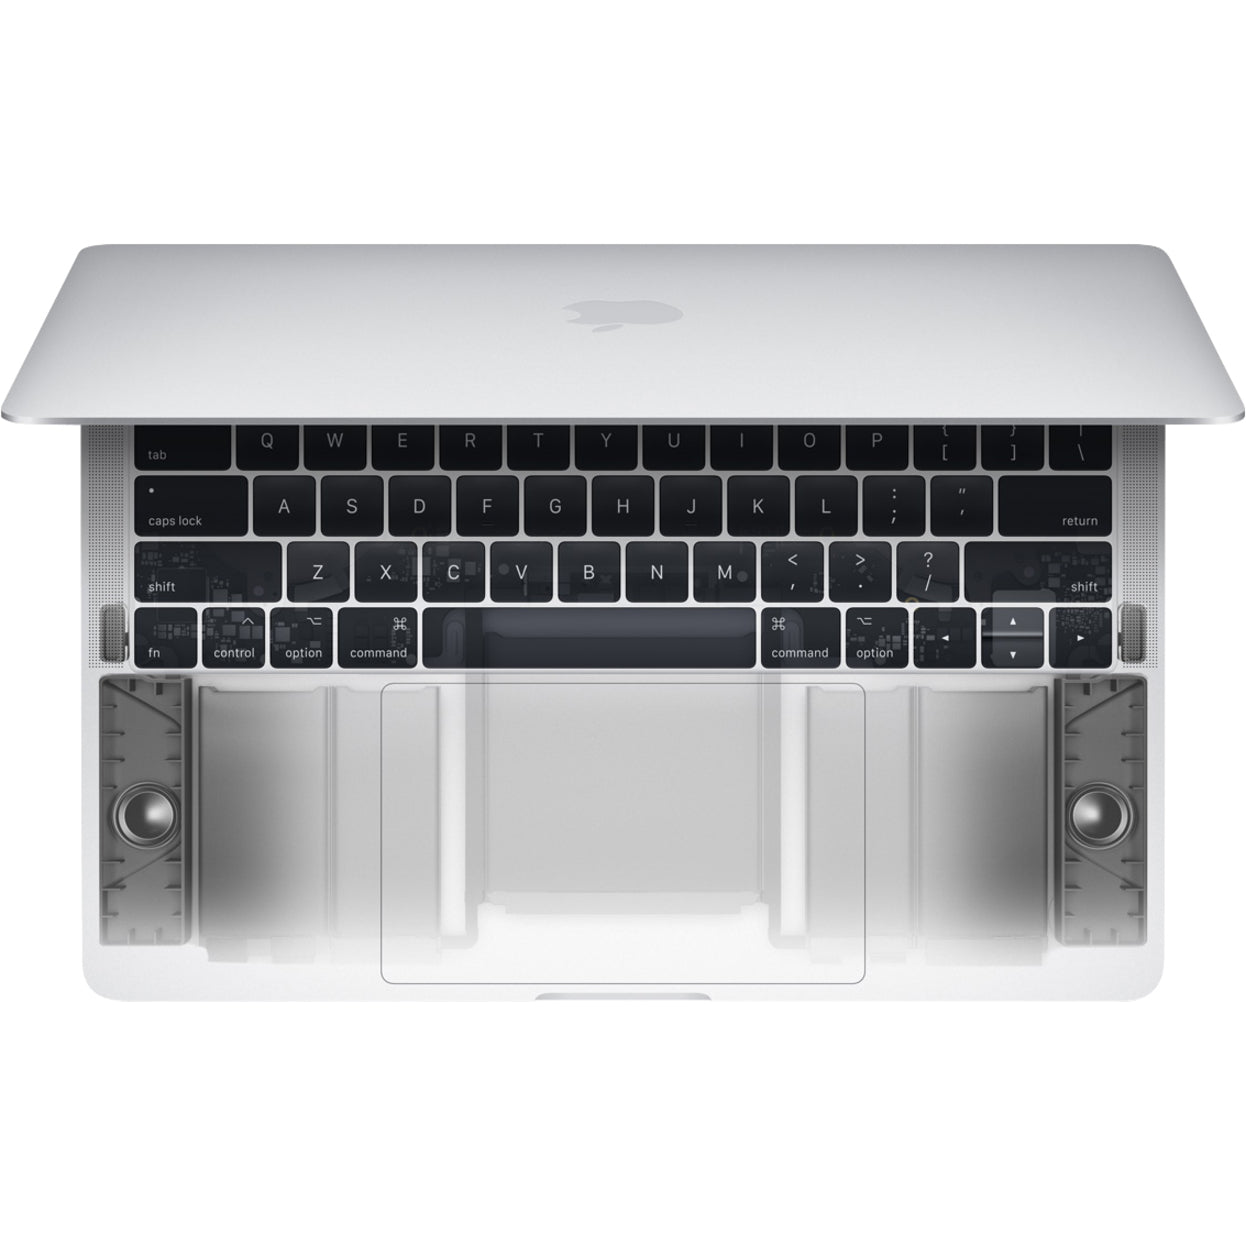 Apple MR972LL/A 15-inch MacBook Pro - Silver, 2.6GHz, 16GB RAM, 512GB SSD, Radeon Pro 560X, 10 Hours Battery